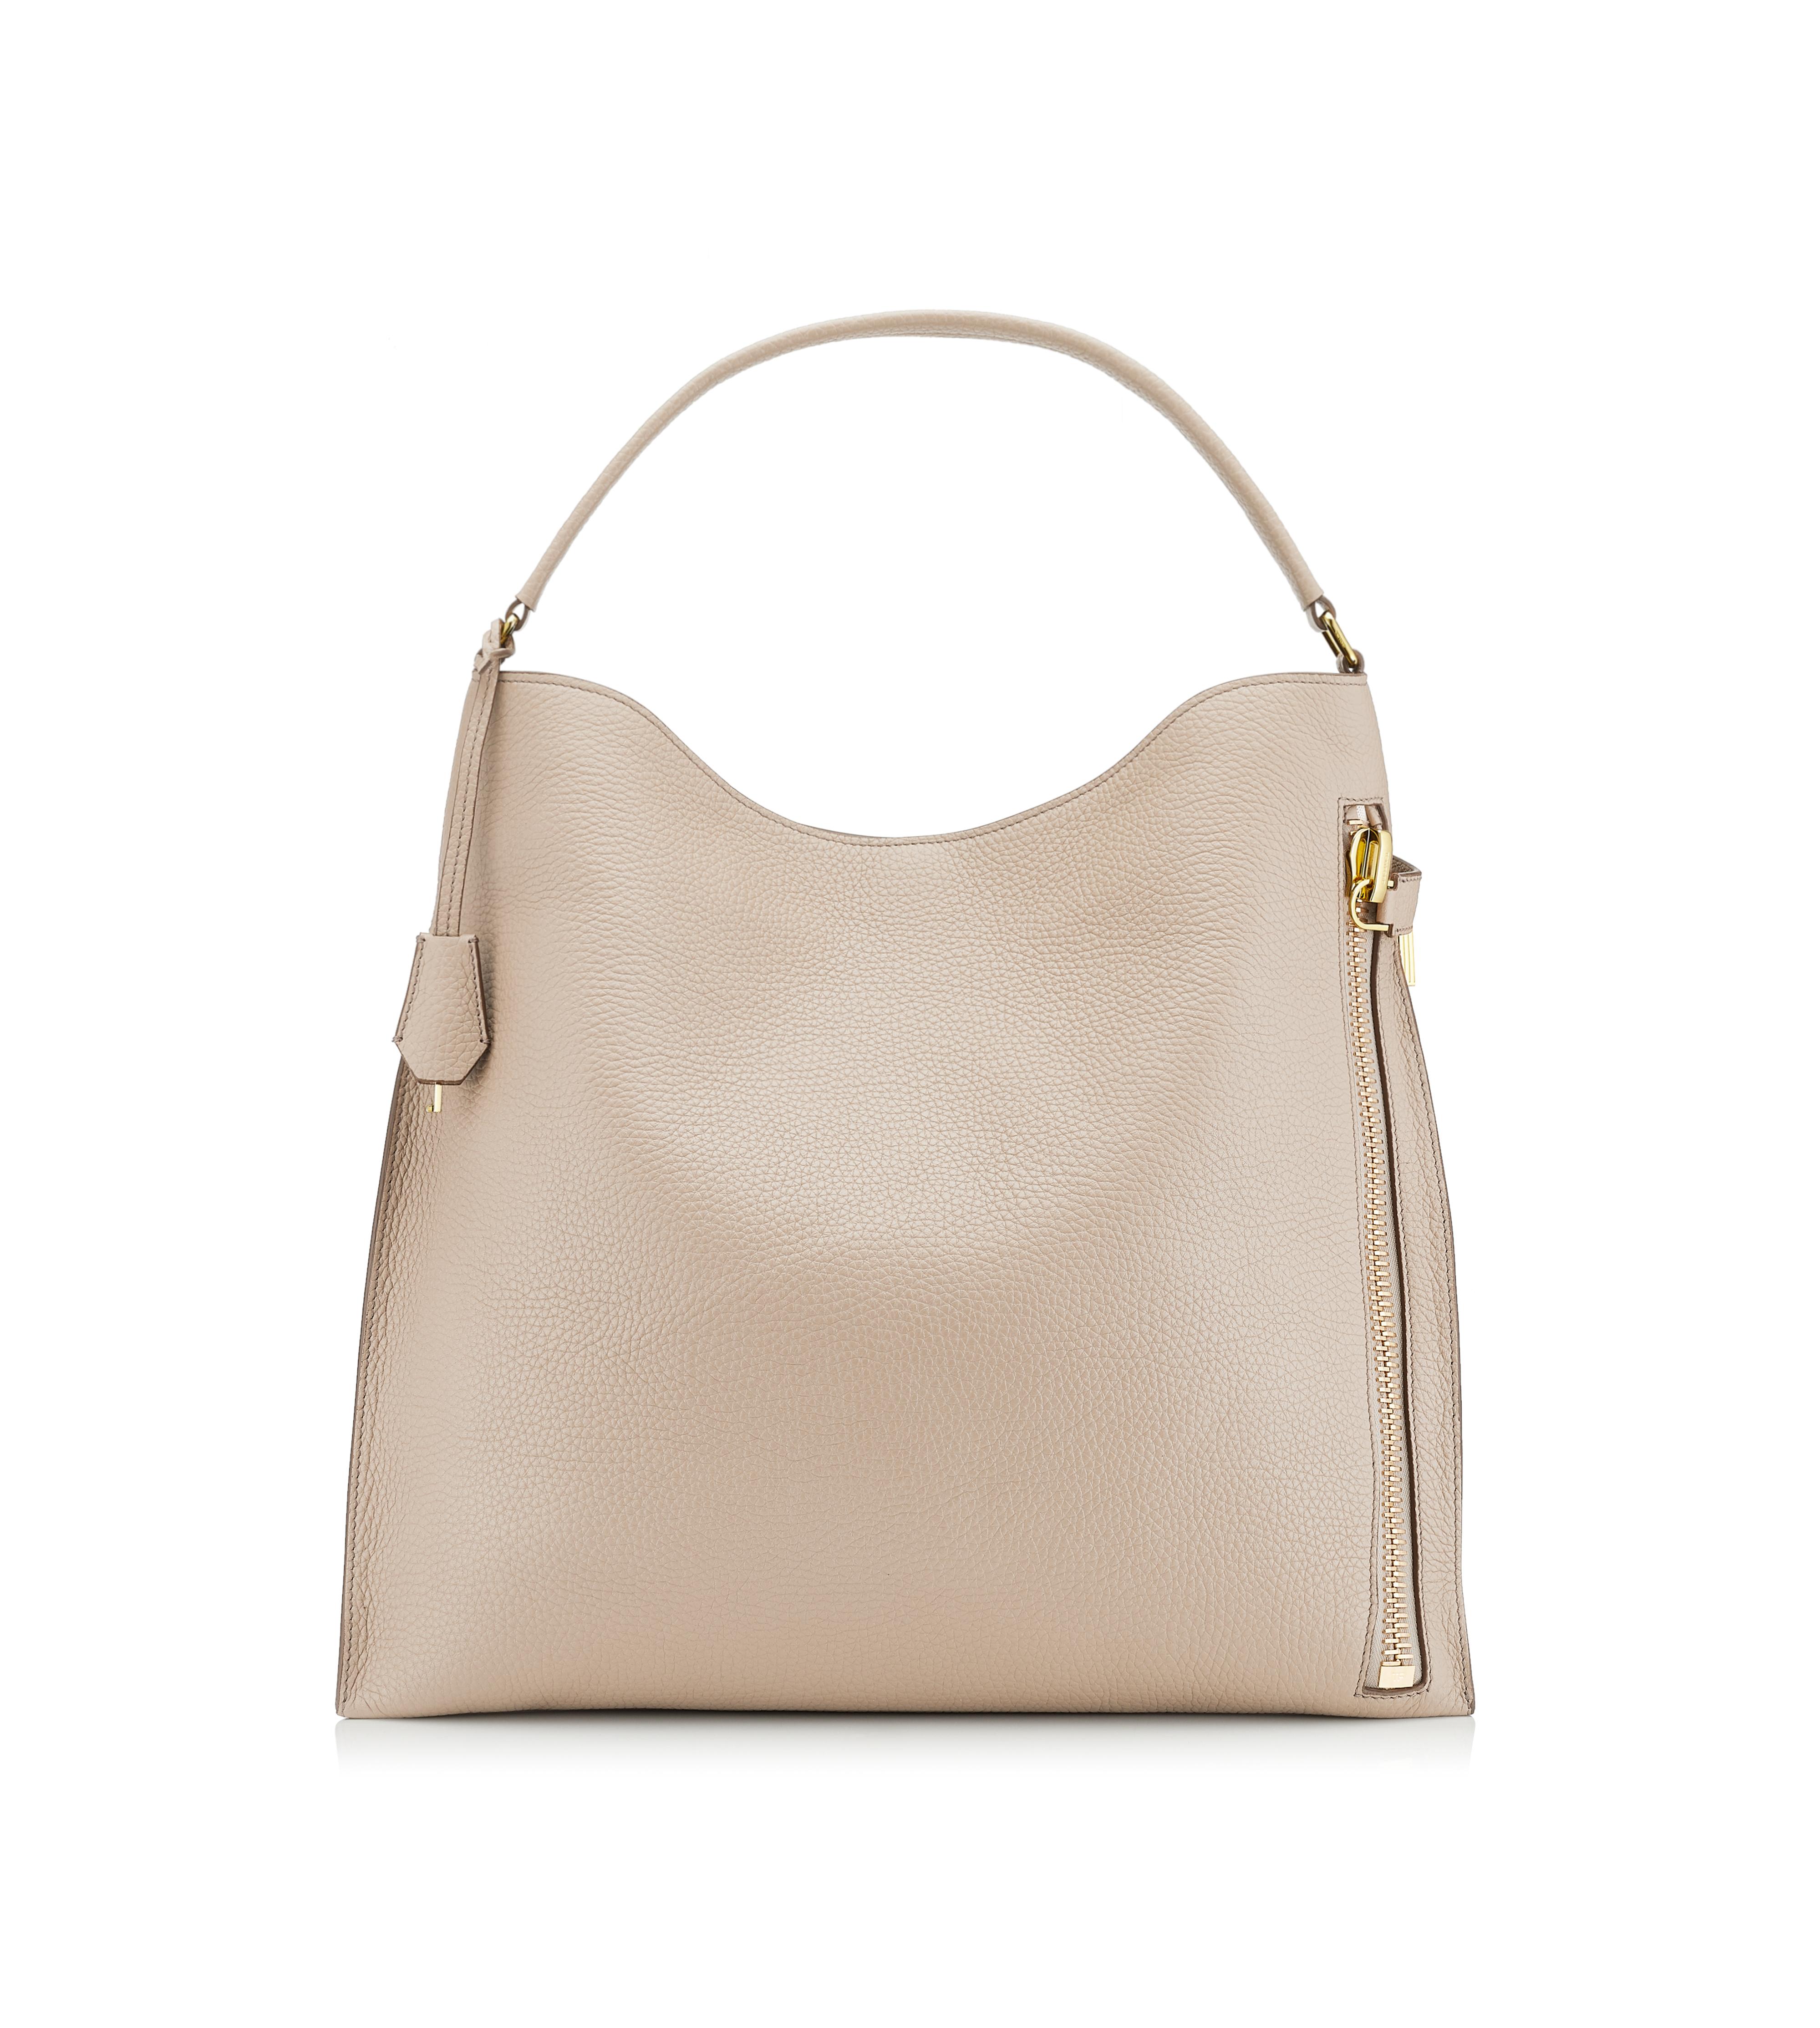 Totes - Women's Handbags | TomFord.com